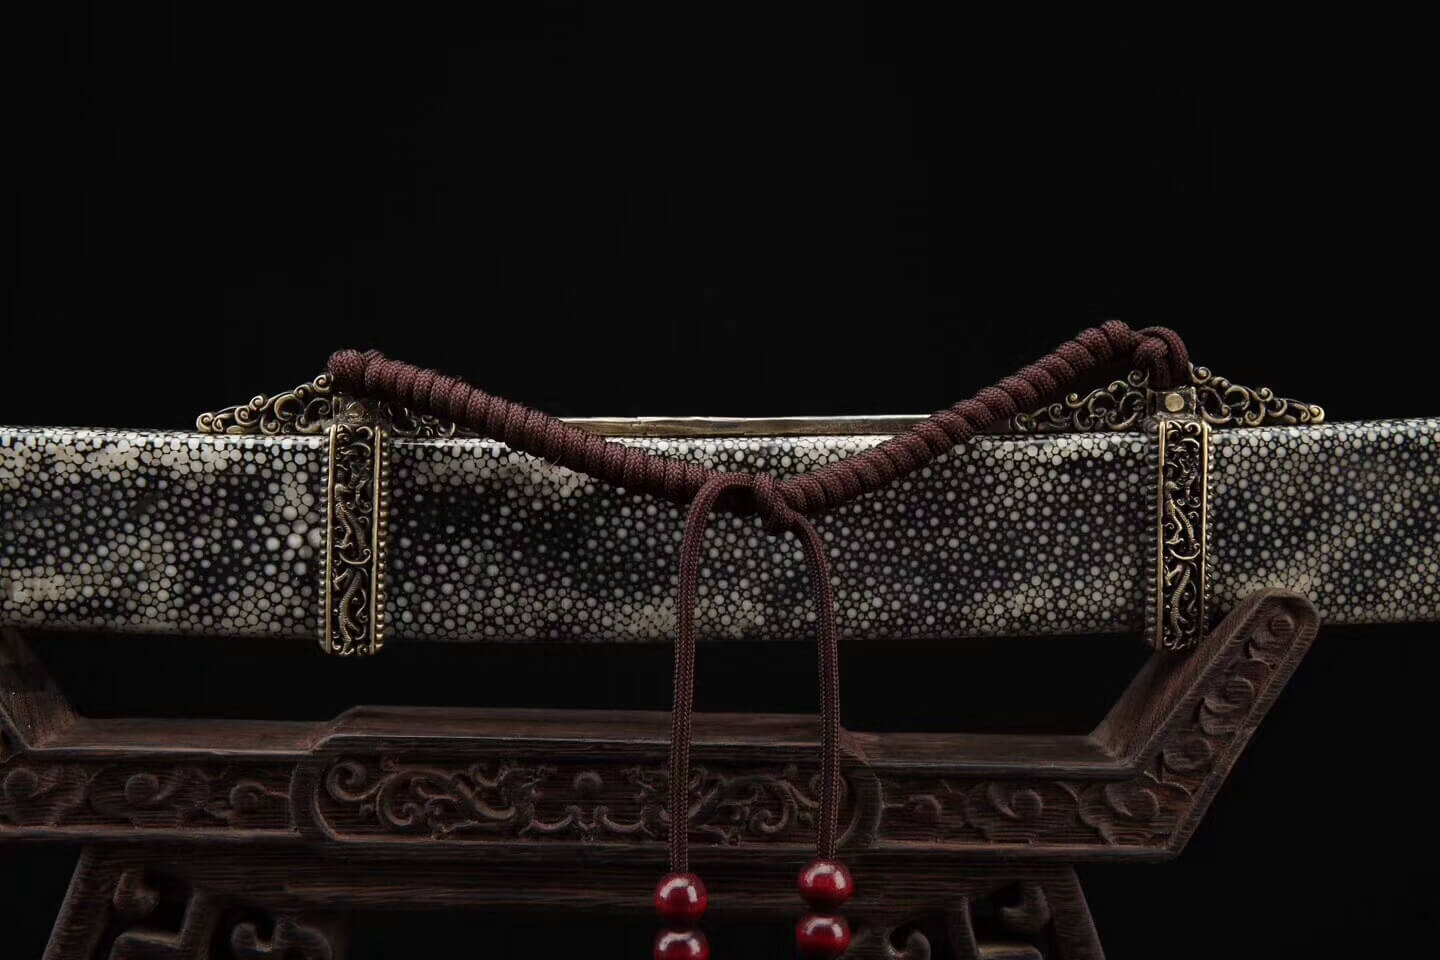 Qin Broadsword(Folded steel blade,Black skin Scabbard,Brass fitting)Length 37" - Chinese sword shop